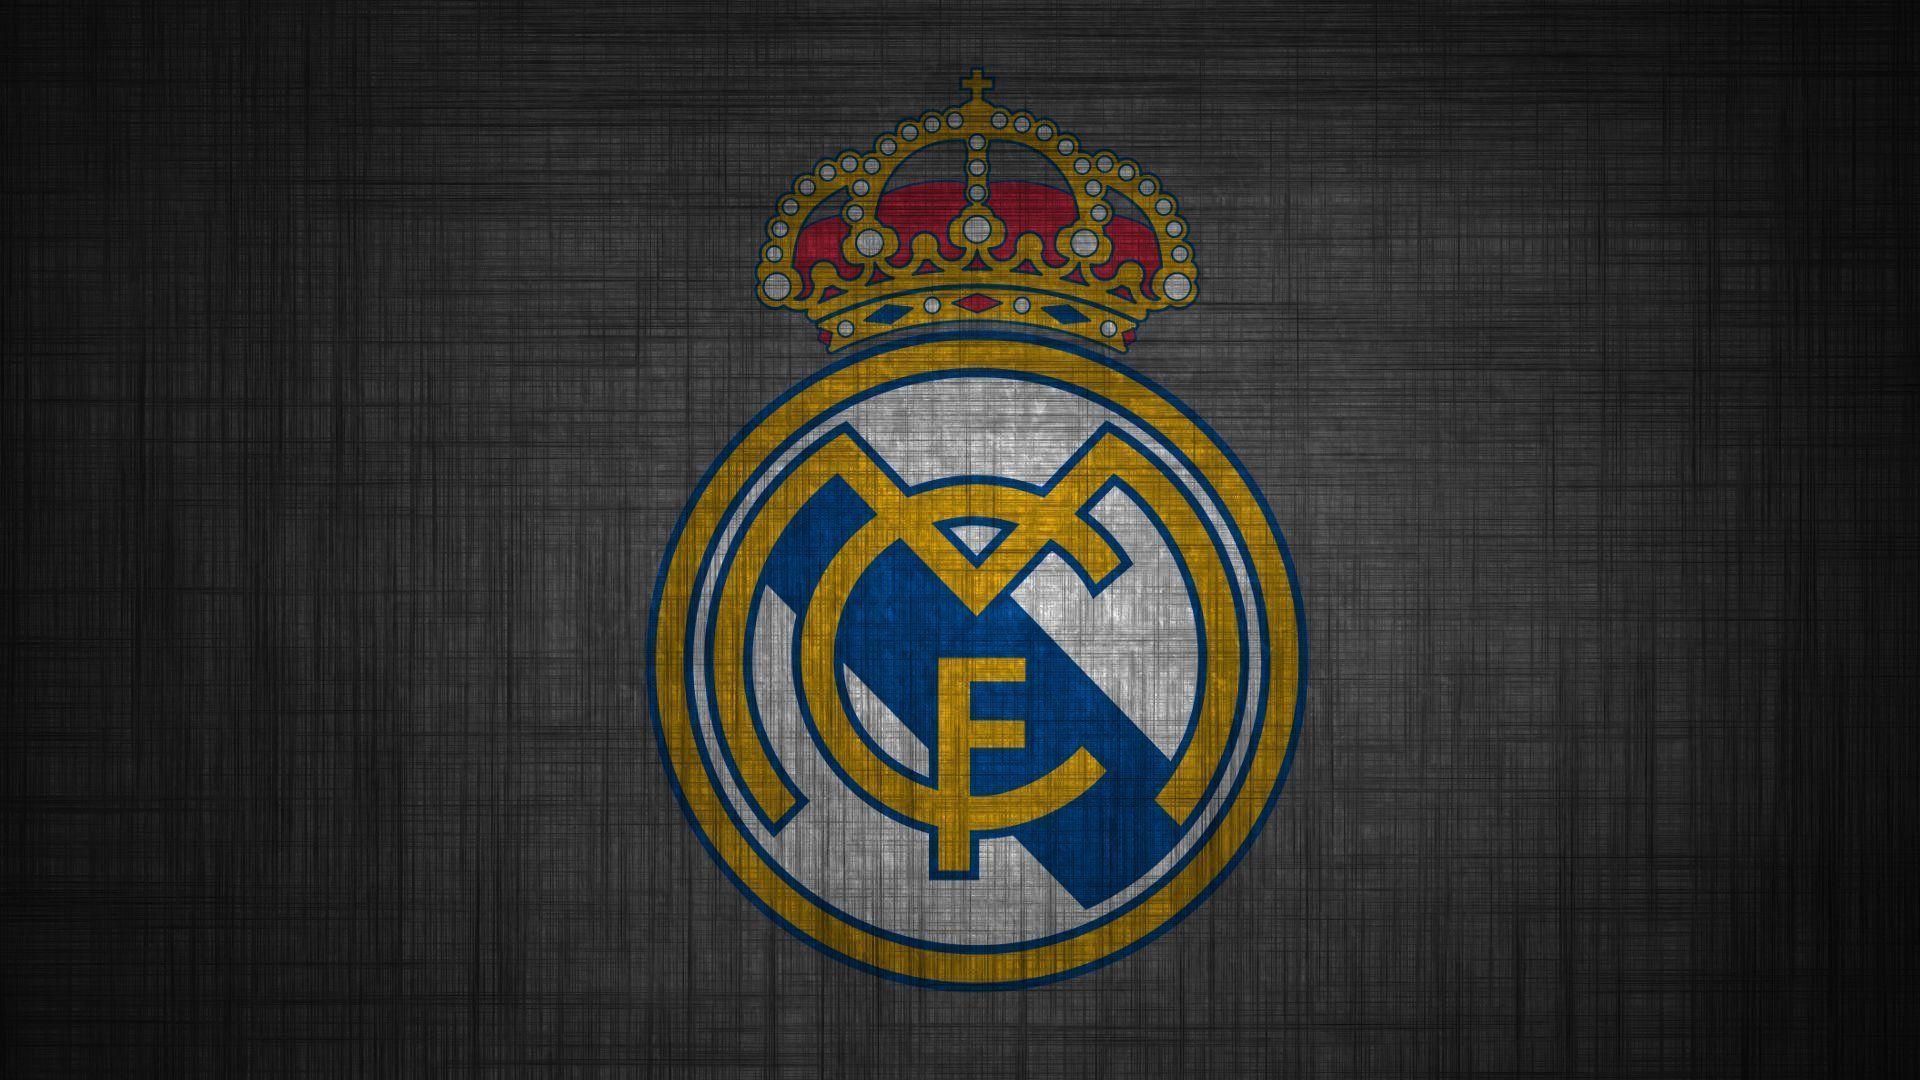 Hd Real Madrid Wallpapers Wallpaper Hd